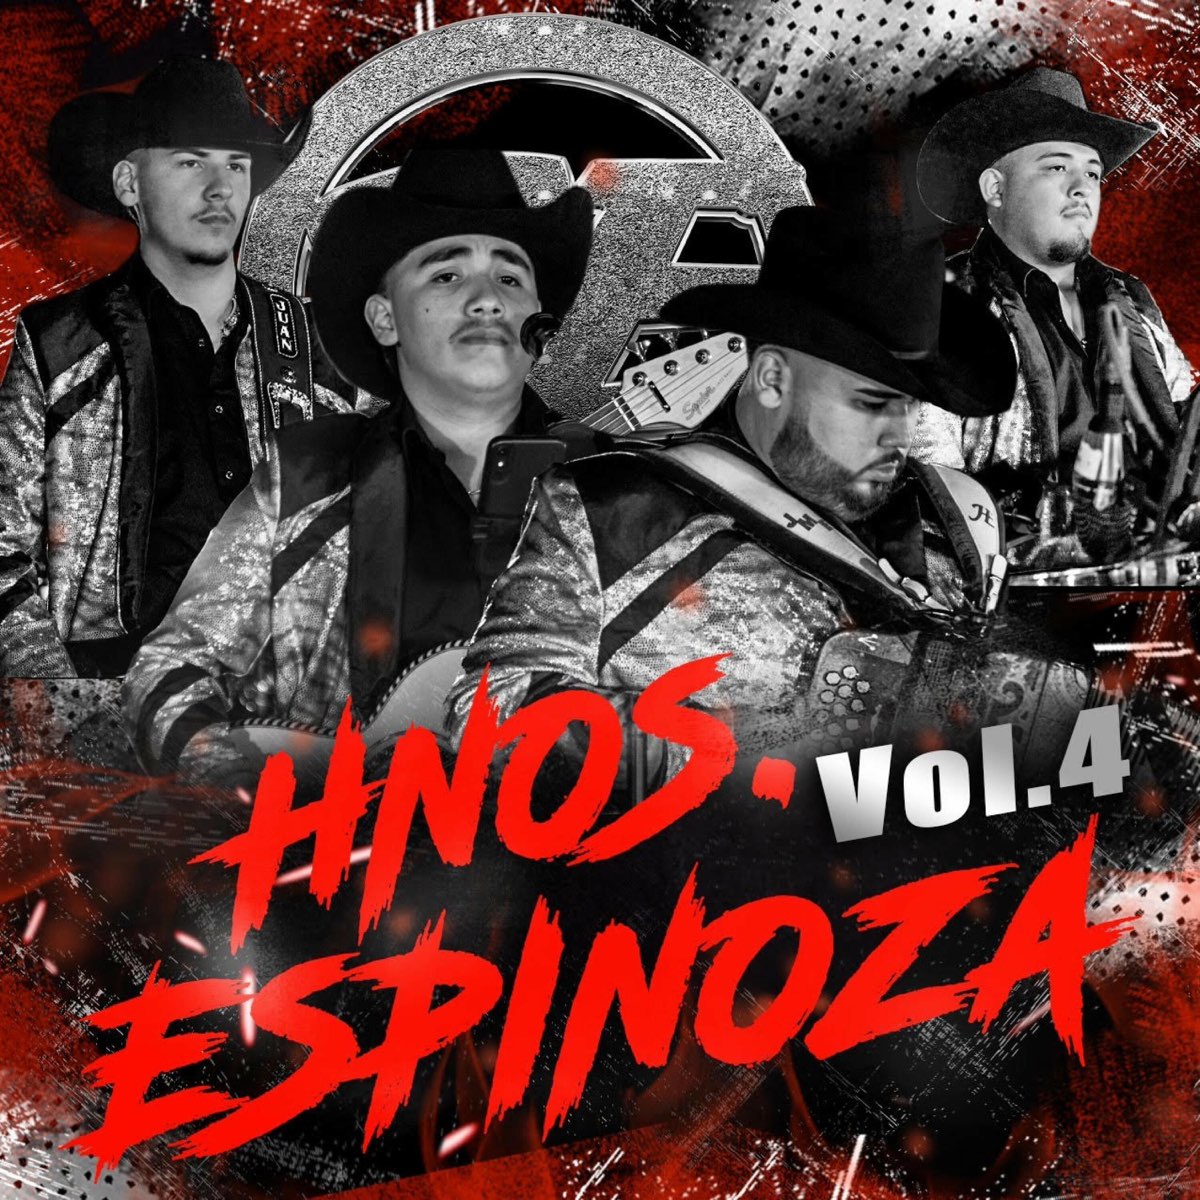 ‎HNOS ESPINOZA, Vol. 4 EP by Hermanos Espinoza on Apple Music